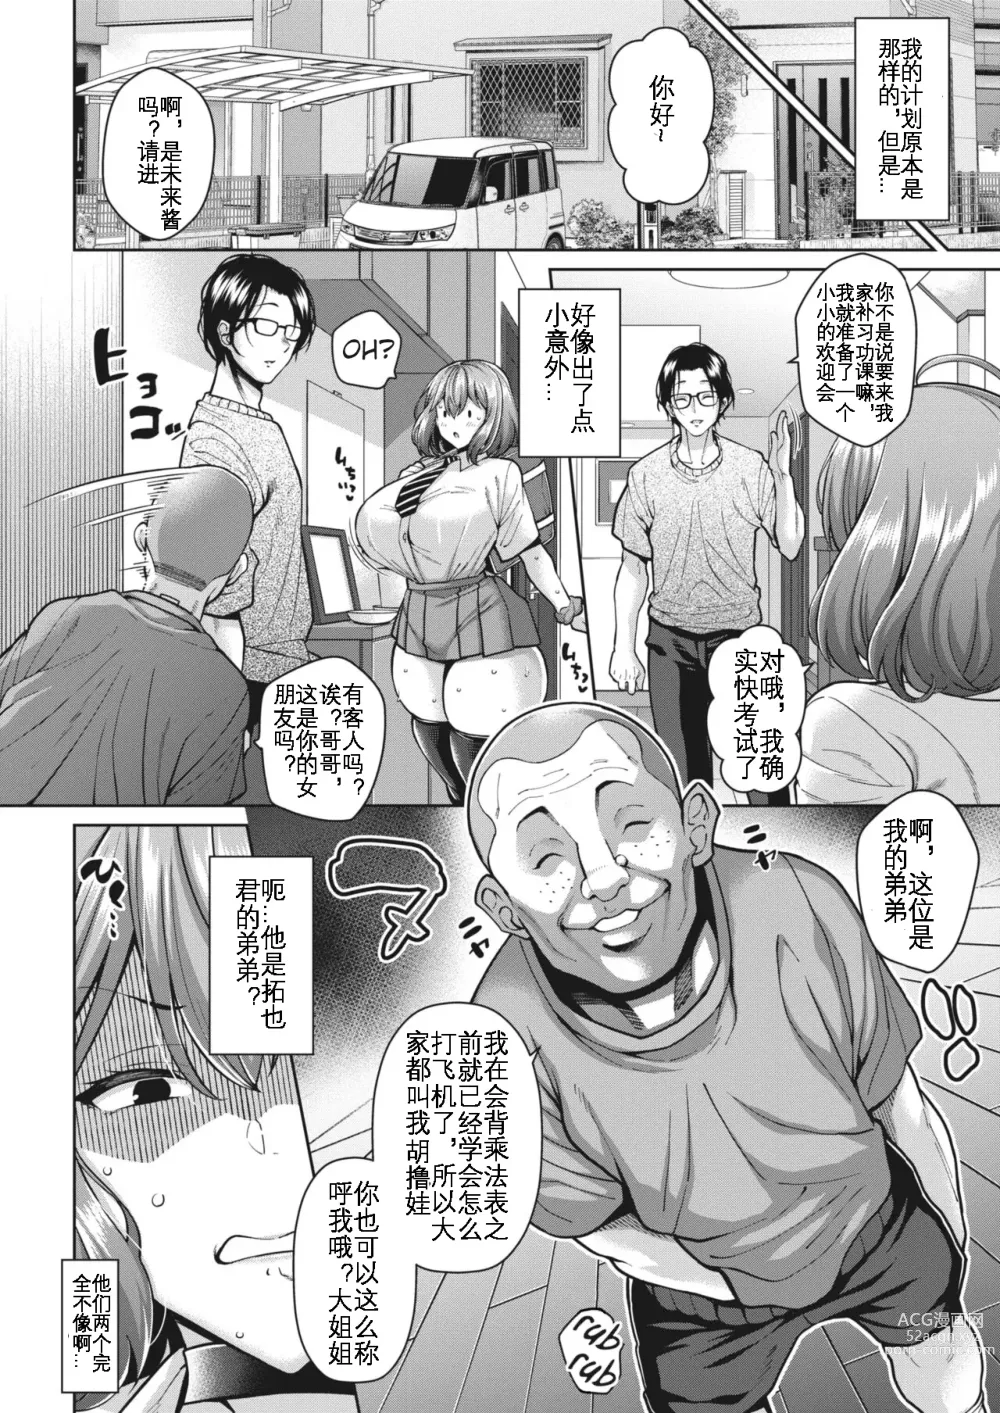 Page 3 of manga 我和男友的爱爱计划被...胡撸娃搞砸了!